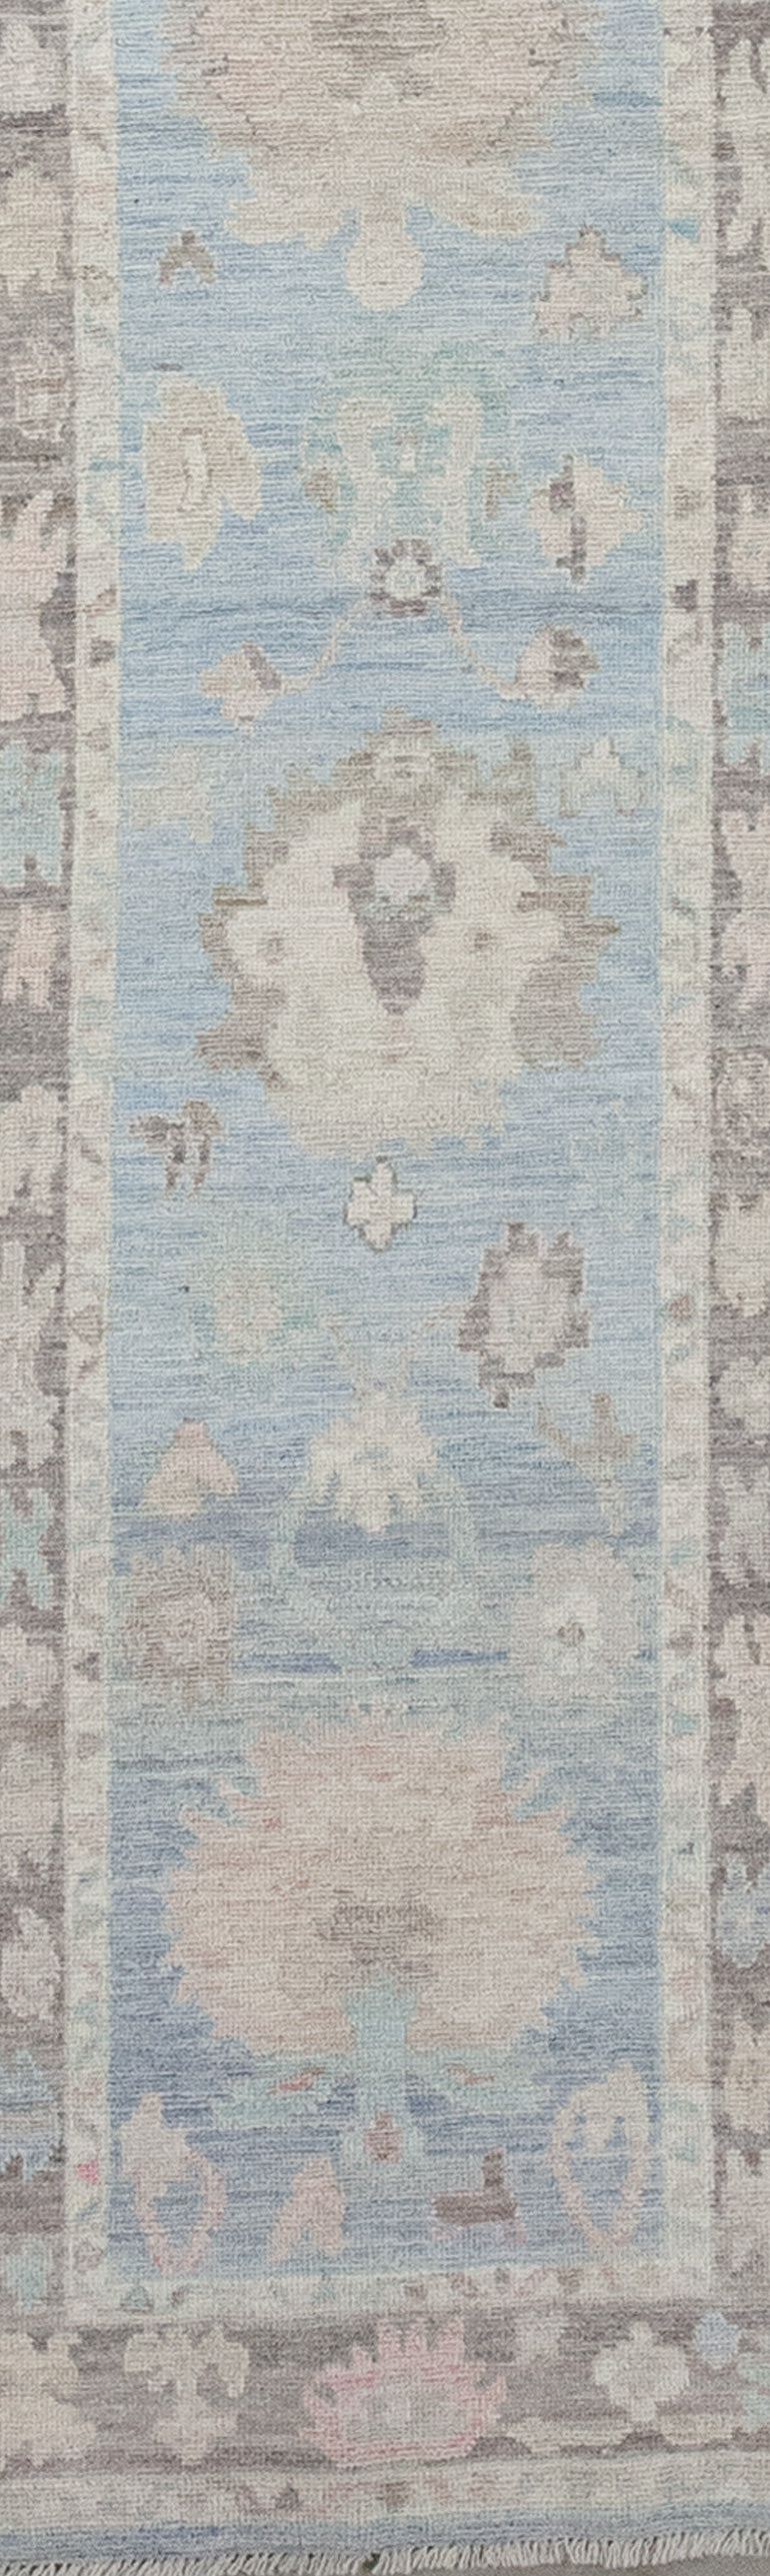 The center of the carpet features four dahlias flowers aligned vertically.